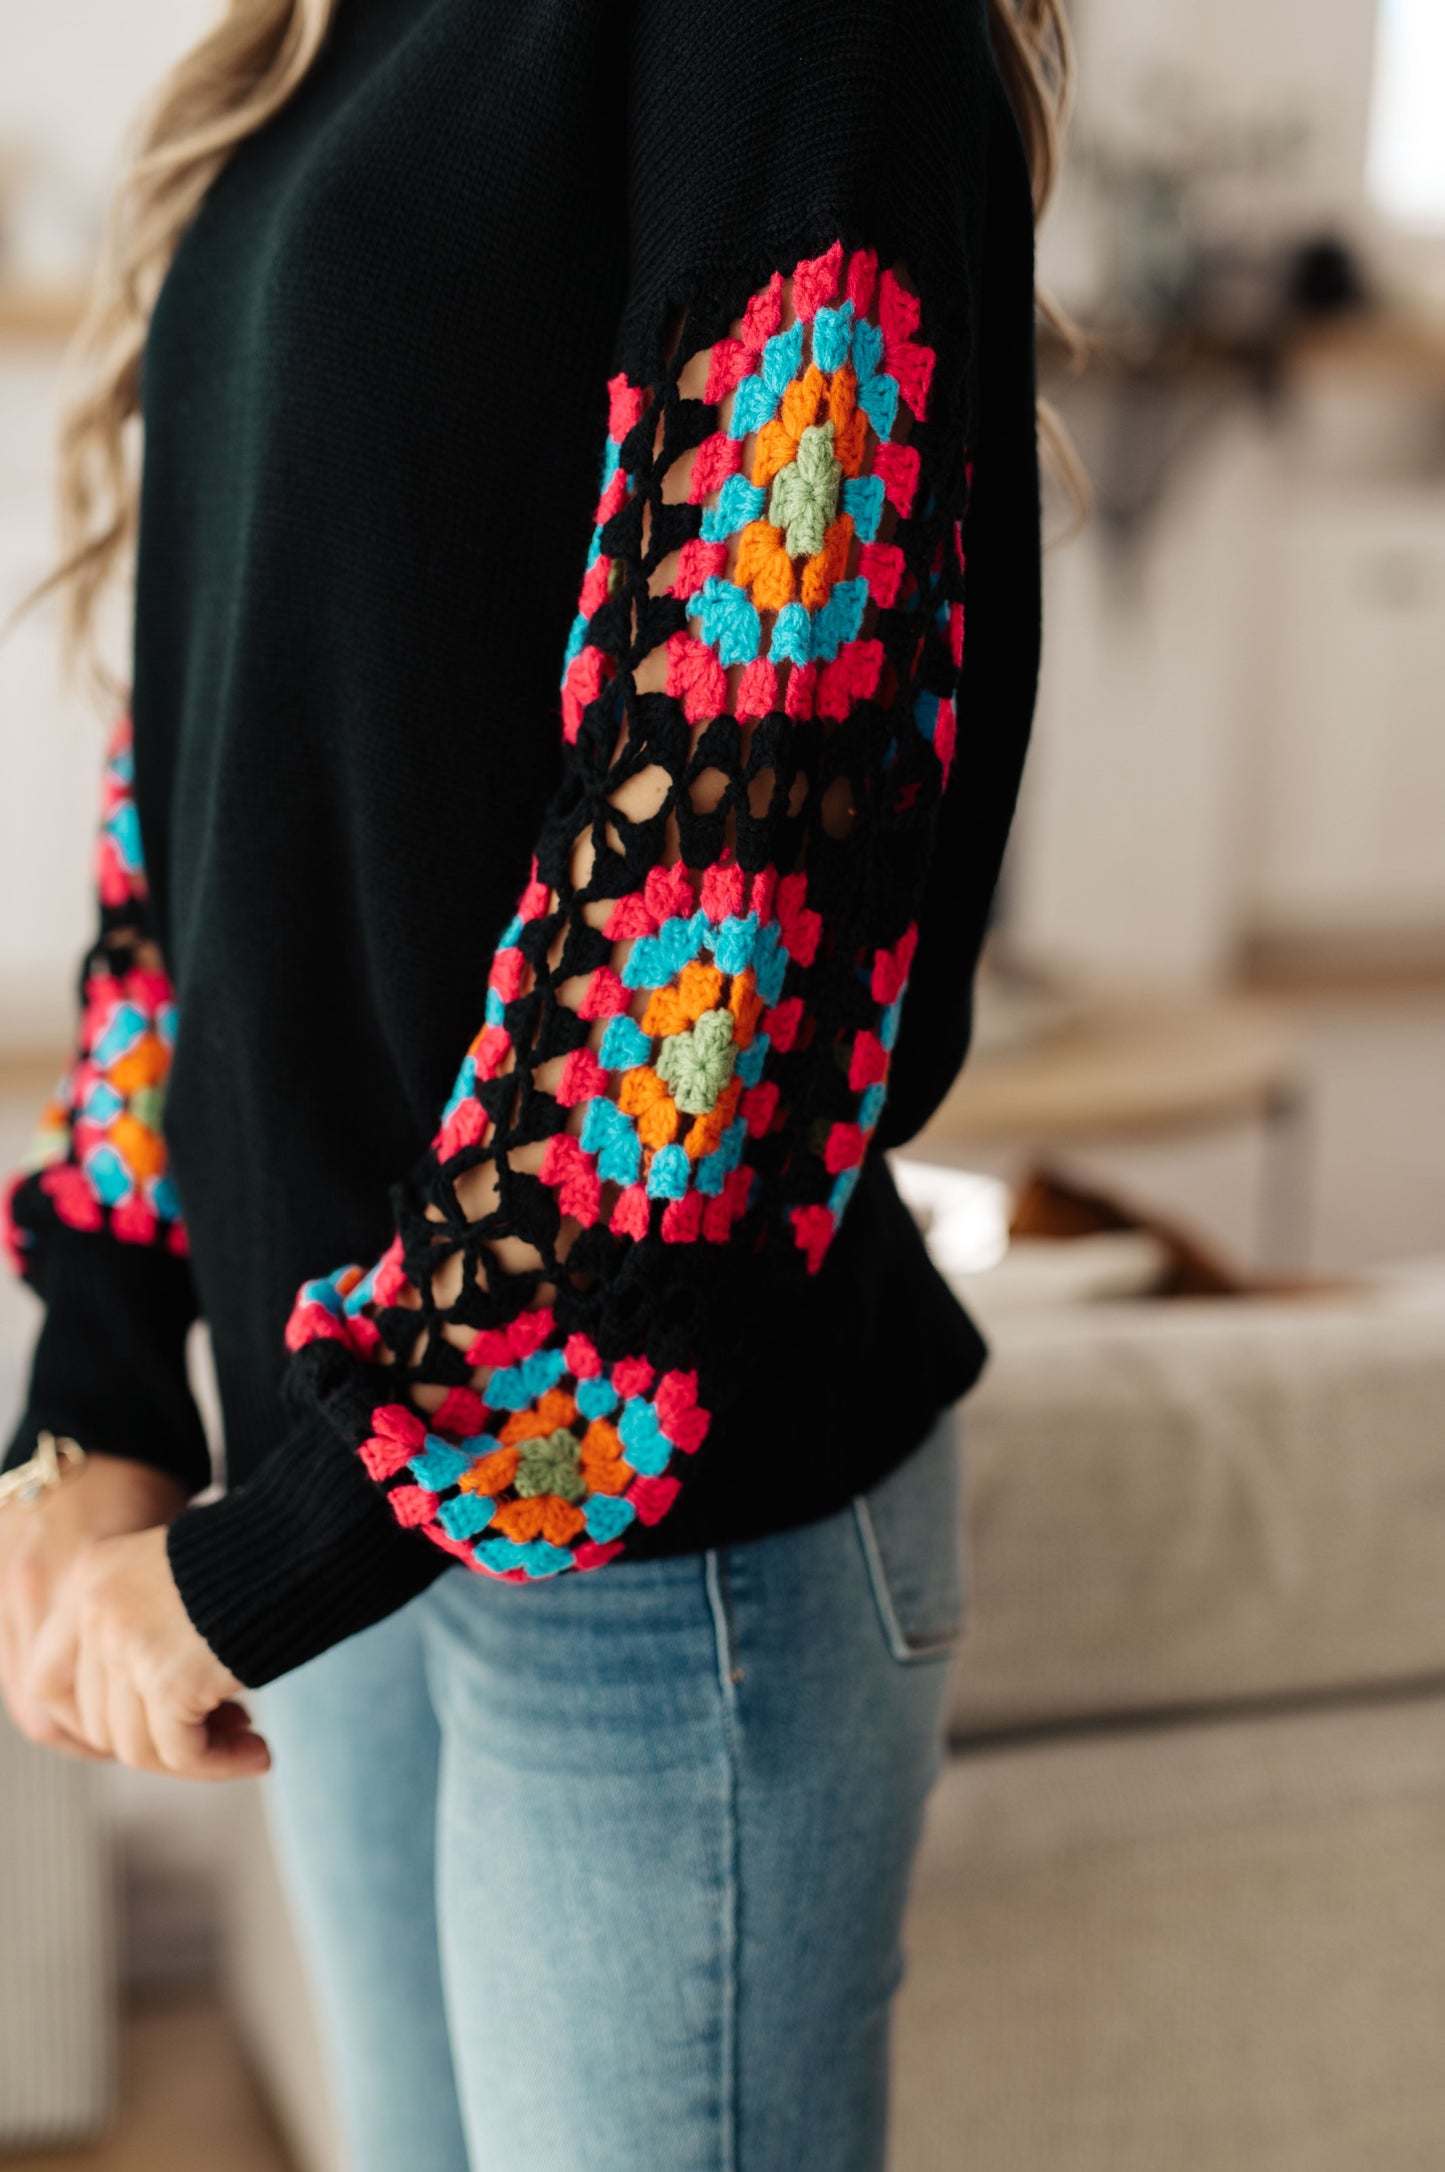 Granny Knows Best Crochet Accent Sweater - Southern Divas Boutique